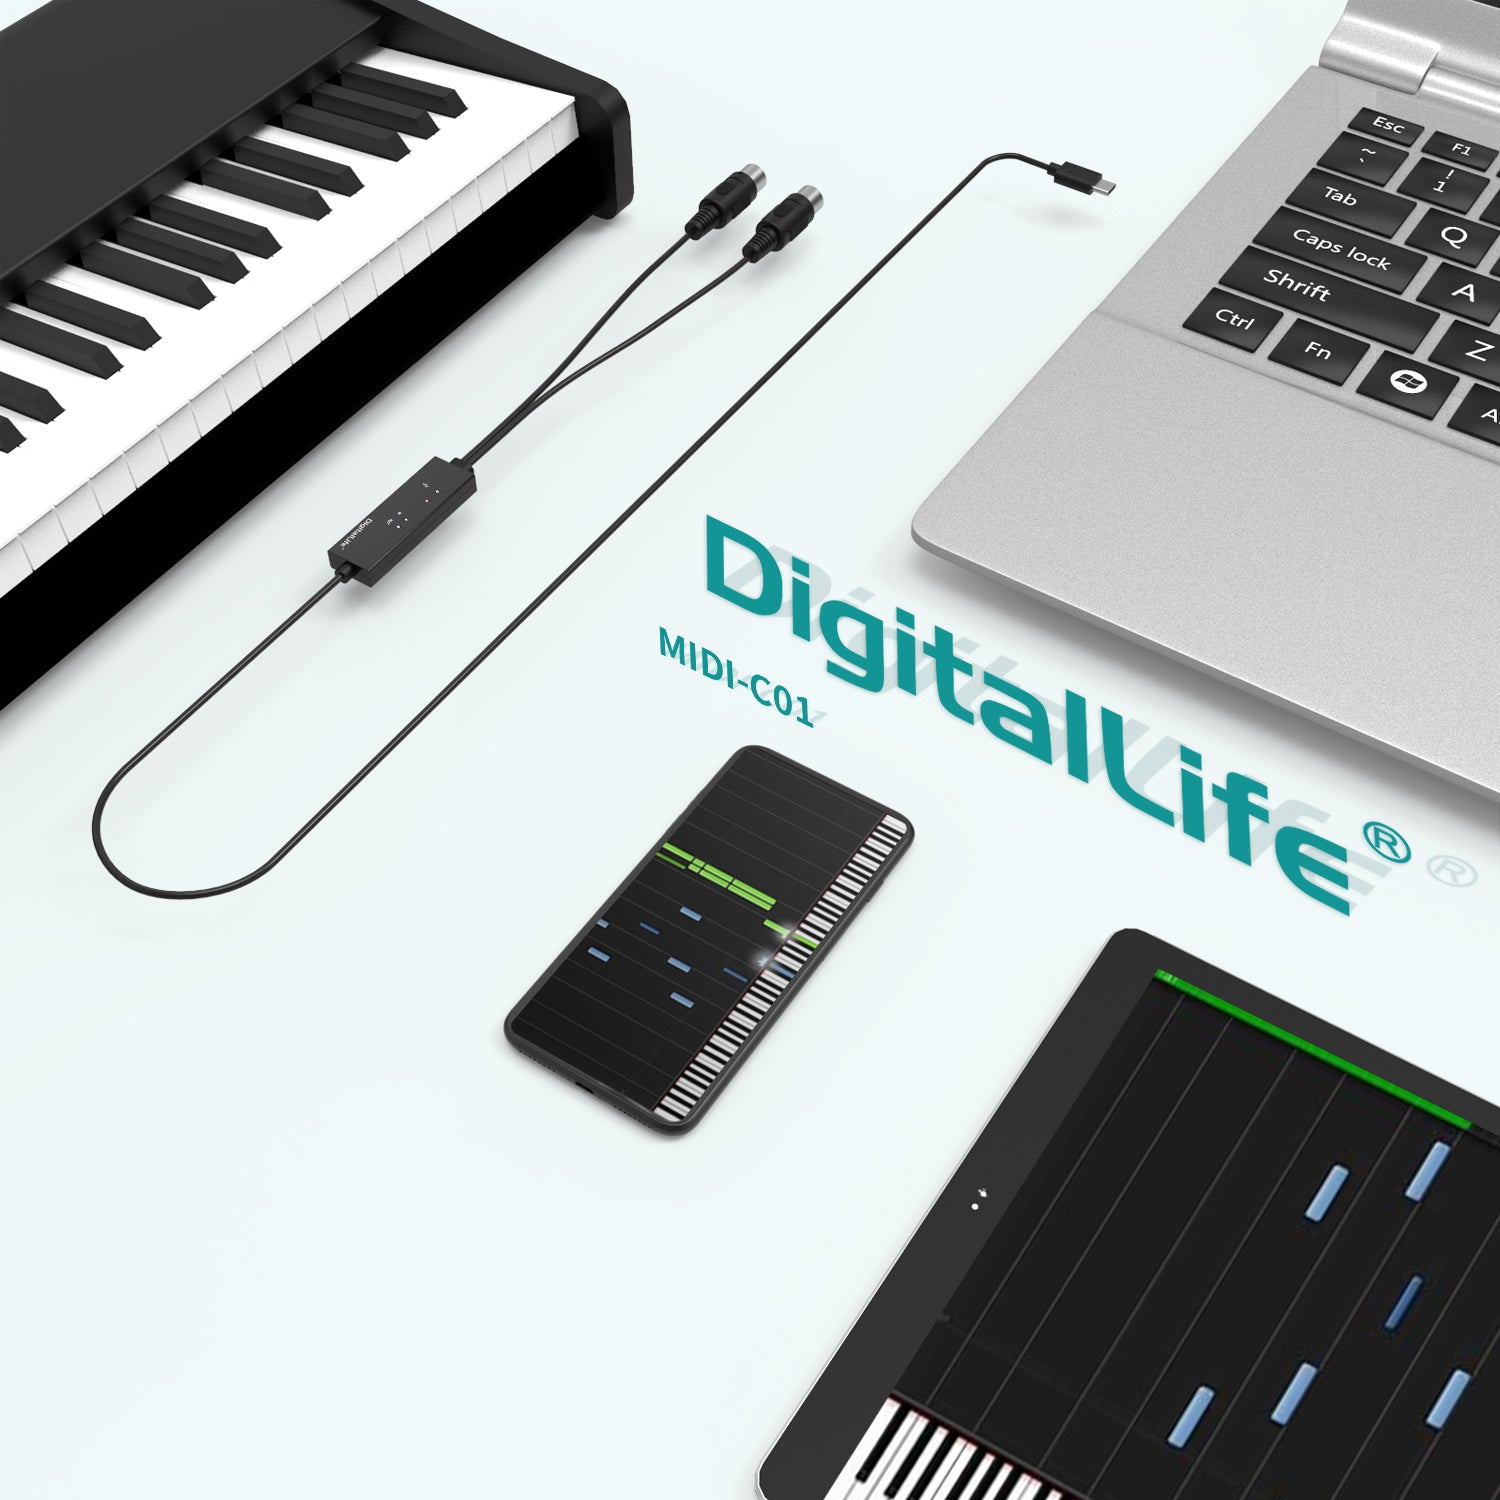 DigitalLife MIDI-A01 | USB-C MIDI Interface with Indicators